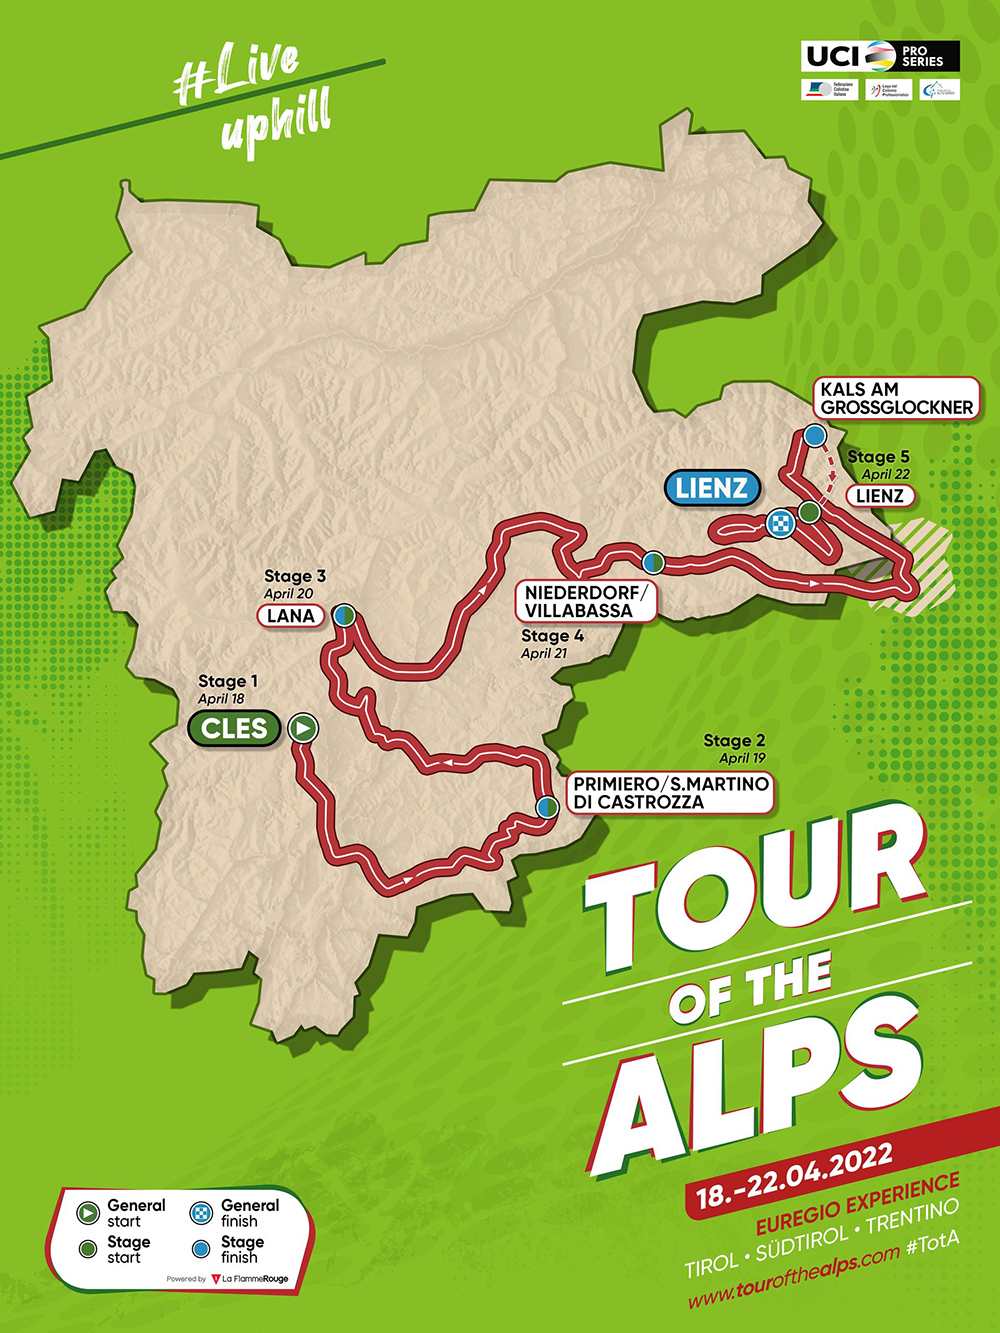 alps tour 2022 schedule